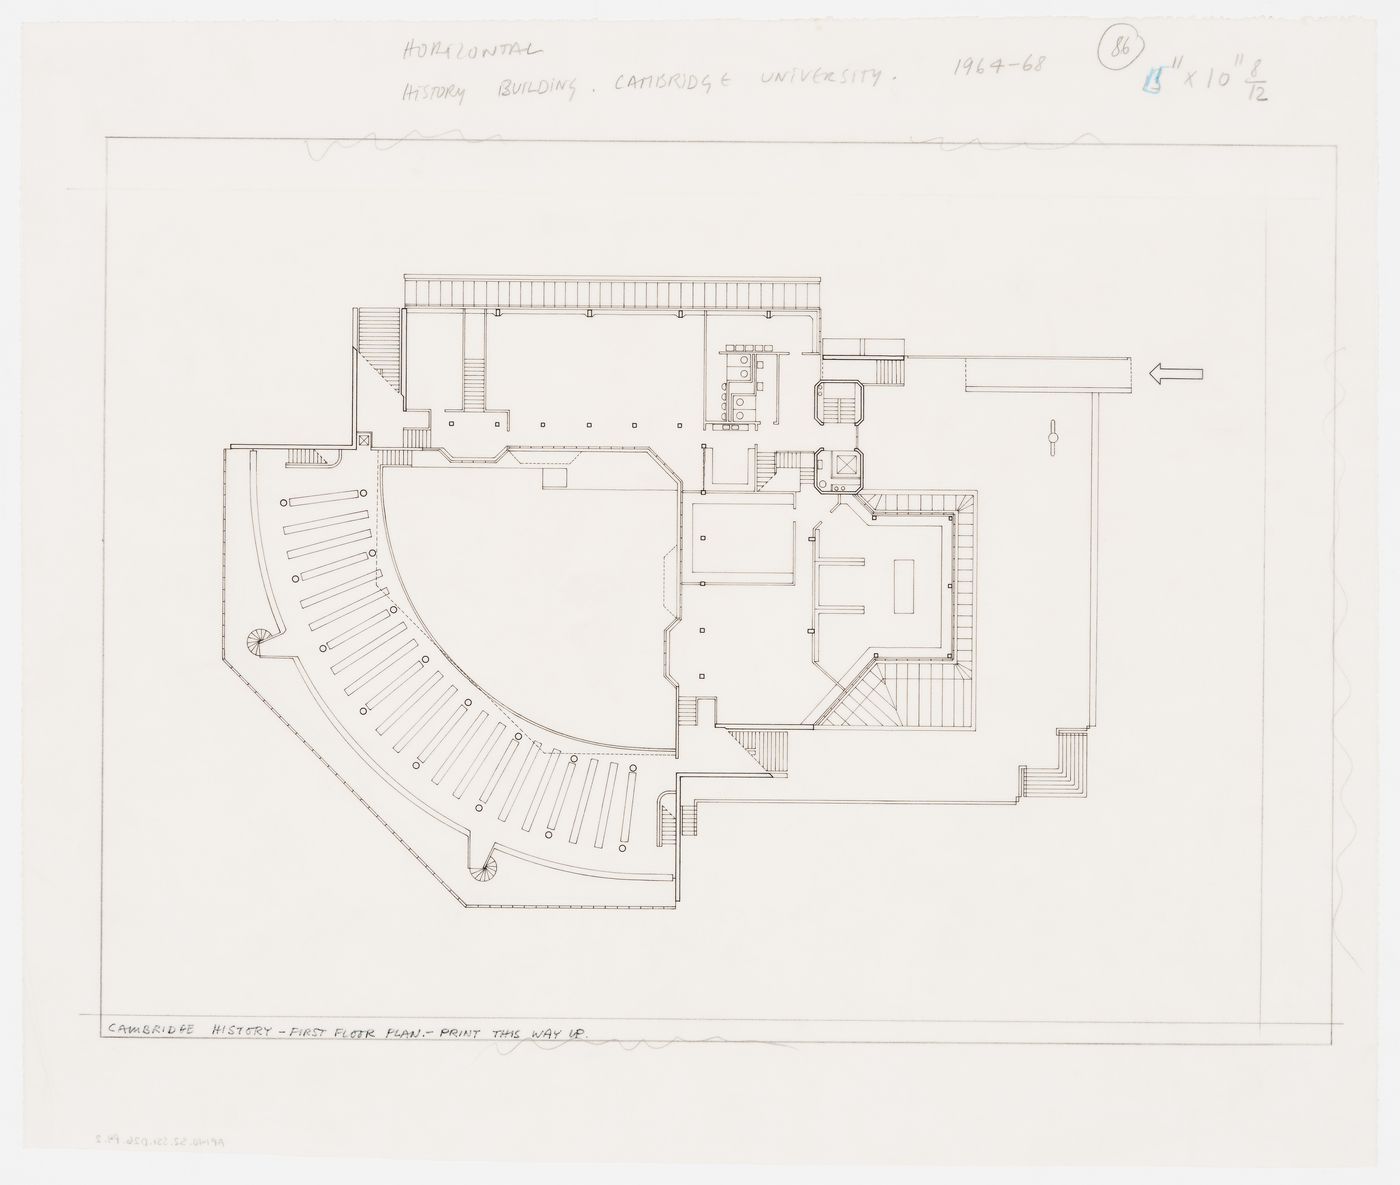 History Faculty Building, University of Cambridge, Cambridge, England: first floor plan